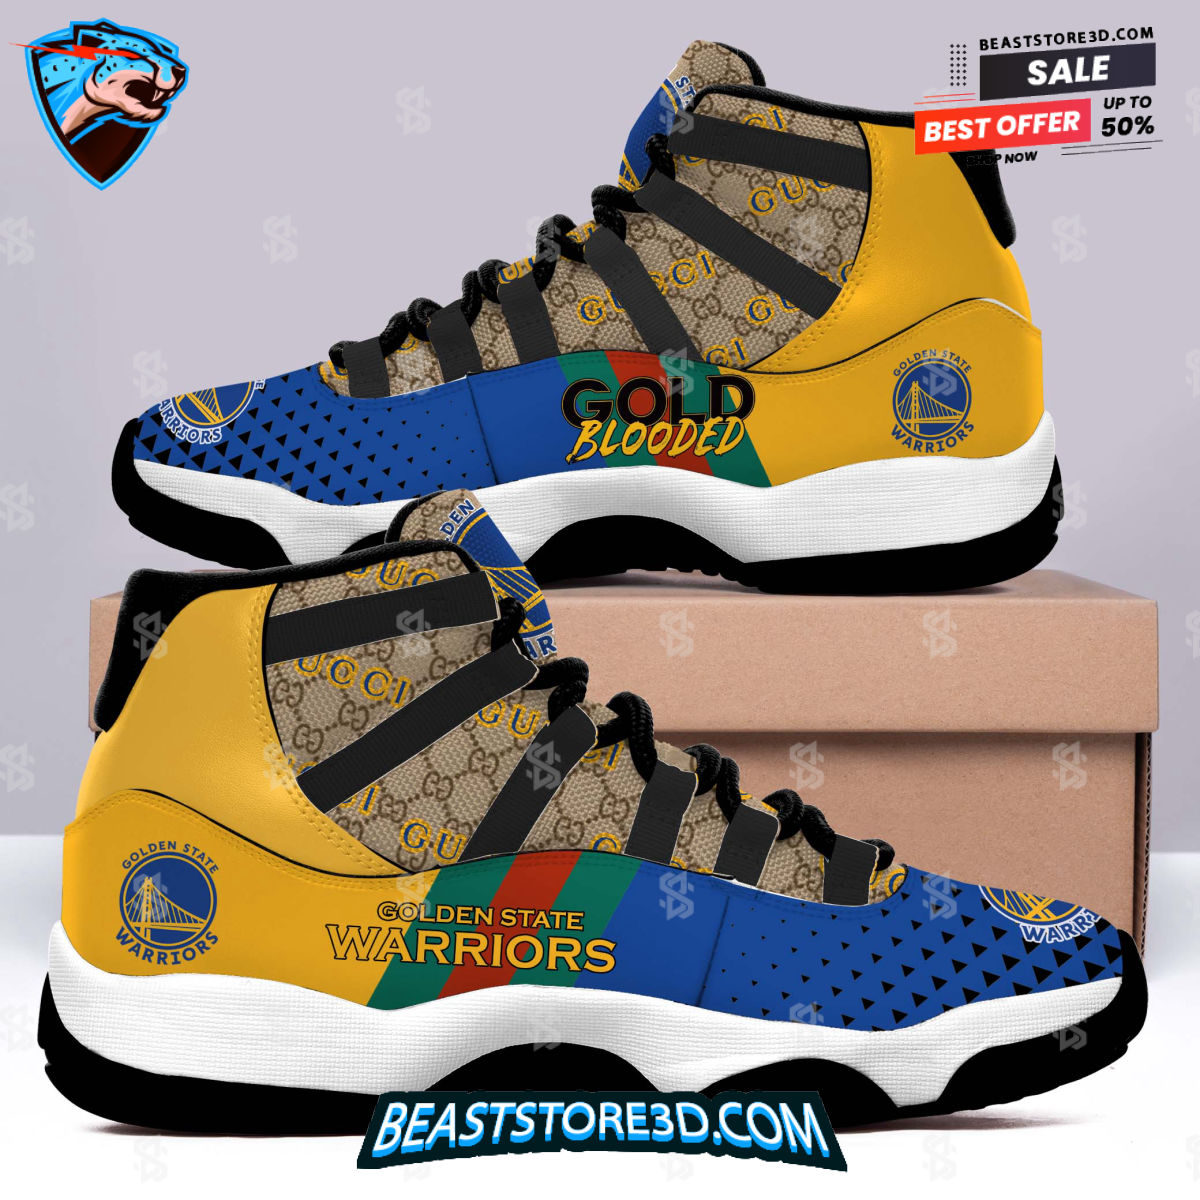 Golden State Warriors x Gucci Gold Blooded Air Jordan Retro 11 Sneakers 1697888686127 lULbM.jpg